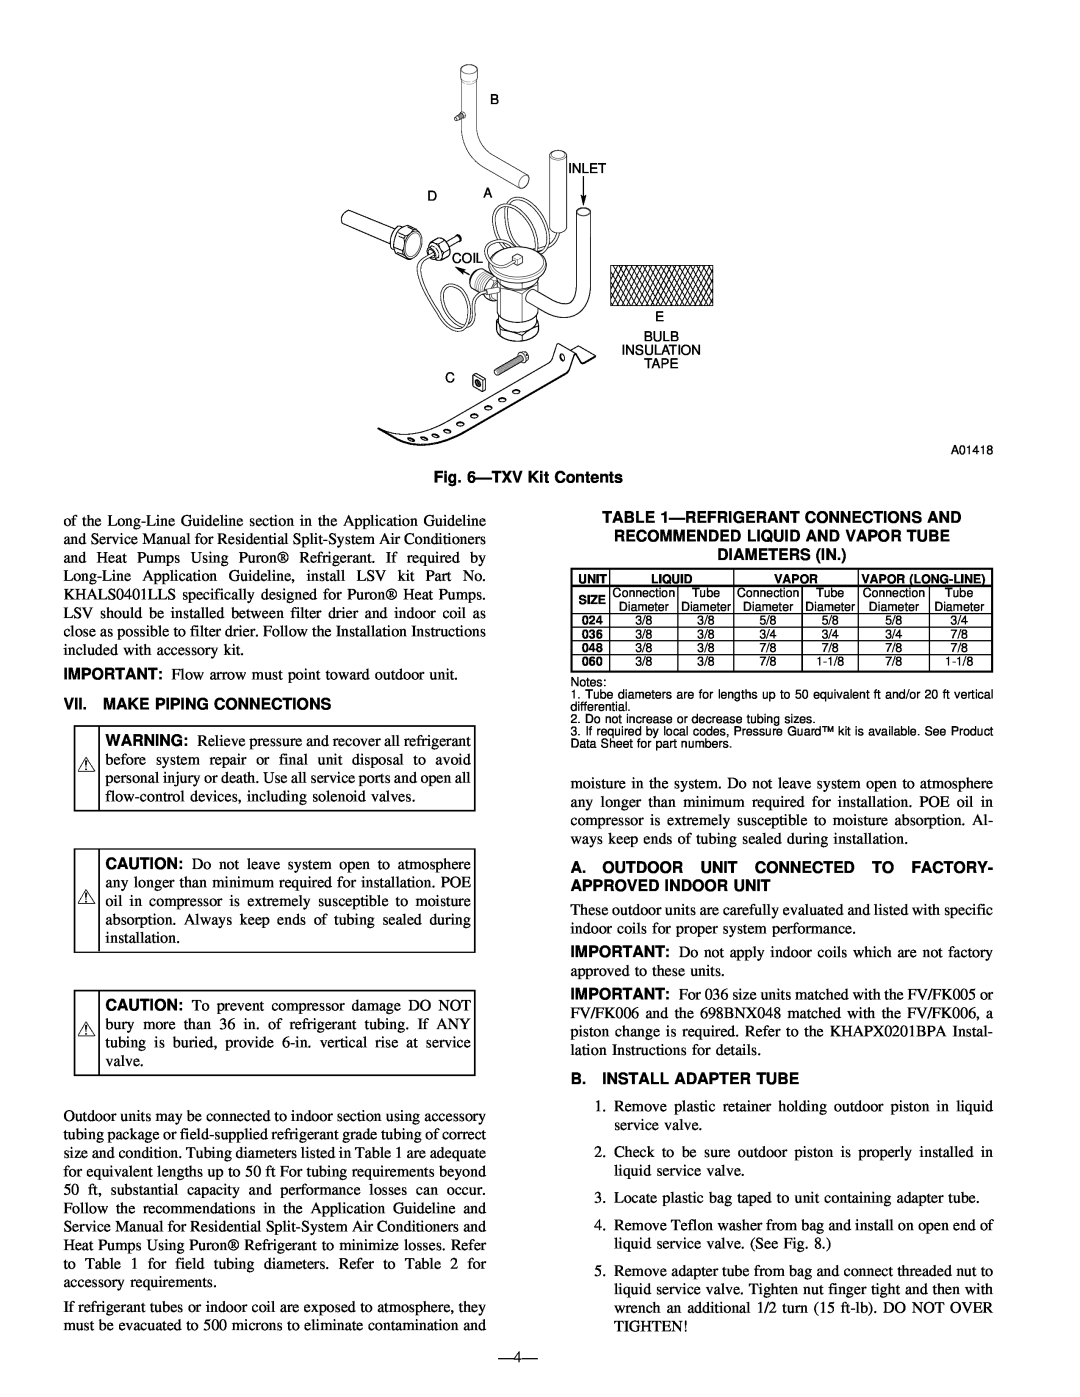 Bryant 698B instruction manual TXVKit Contents, Vii. Make Piping Connections, B.Install Adapter Tube 